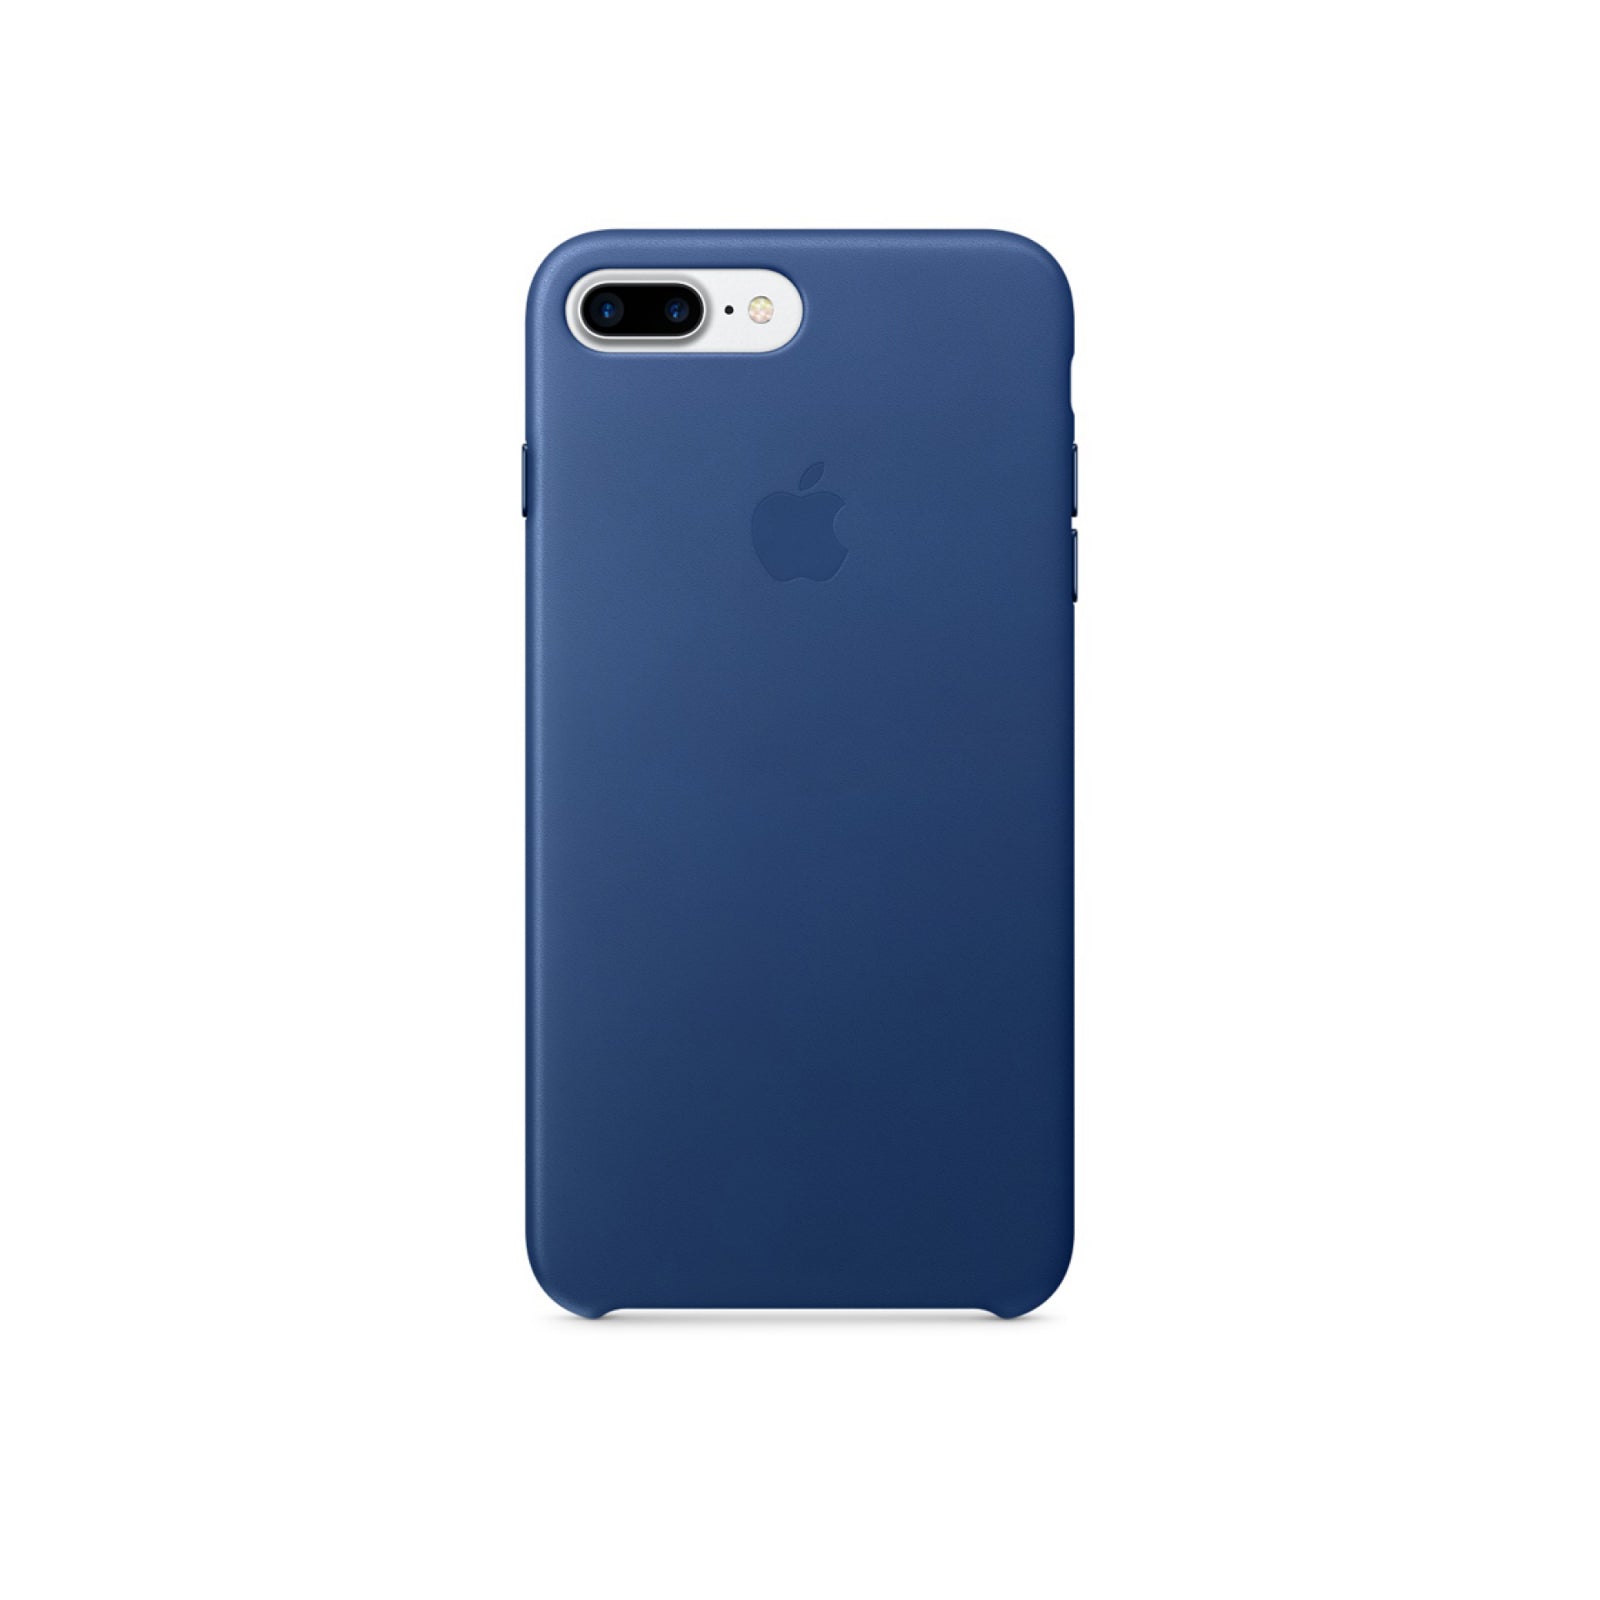 Apple iPhone 7 Plus Leather Case - Sapphire